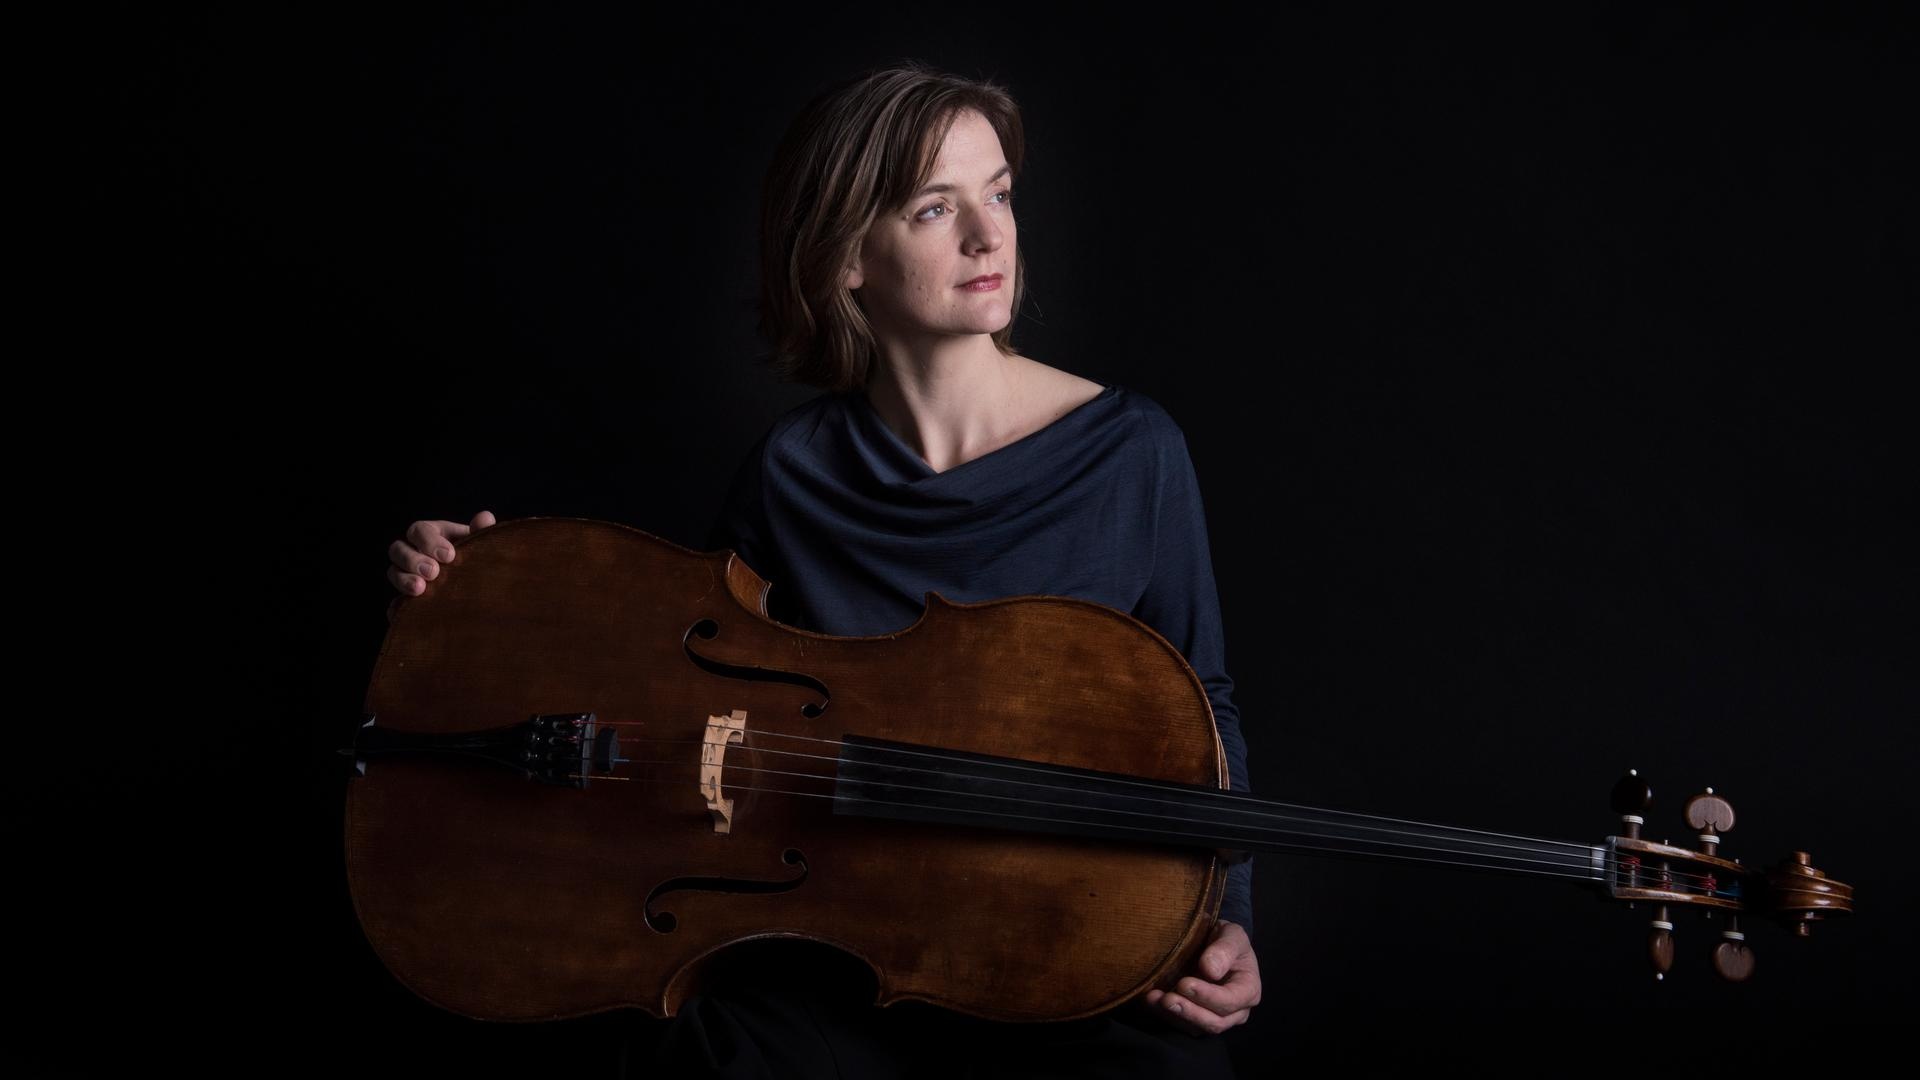 Violoncello: Tanja Tetzlaff, German Cellist,  A Member Of The String Quartet Led By Her Brother Christian Tetzlaff. 1920x1080 Full HD Wallpaper.